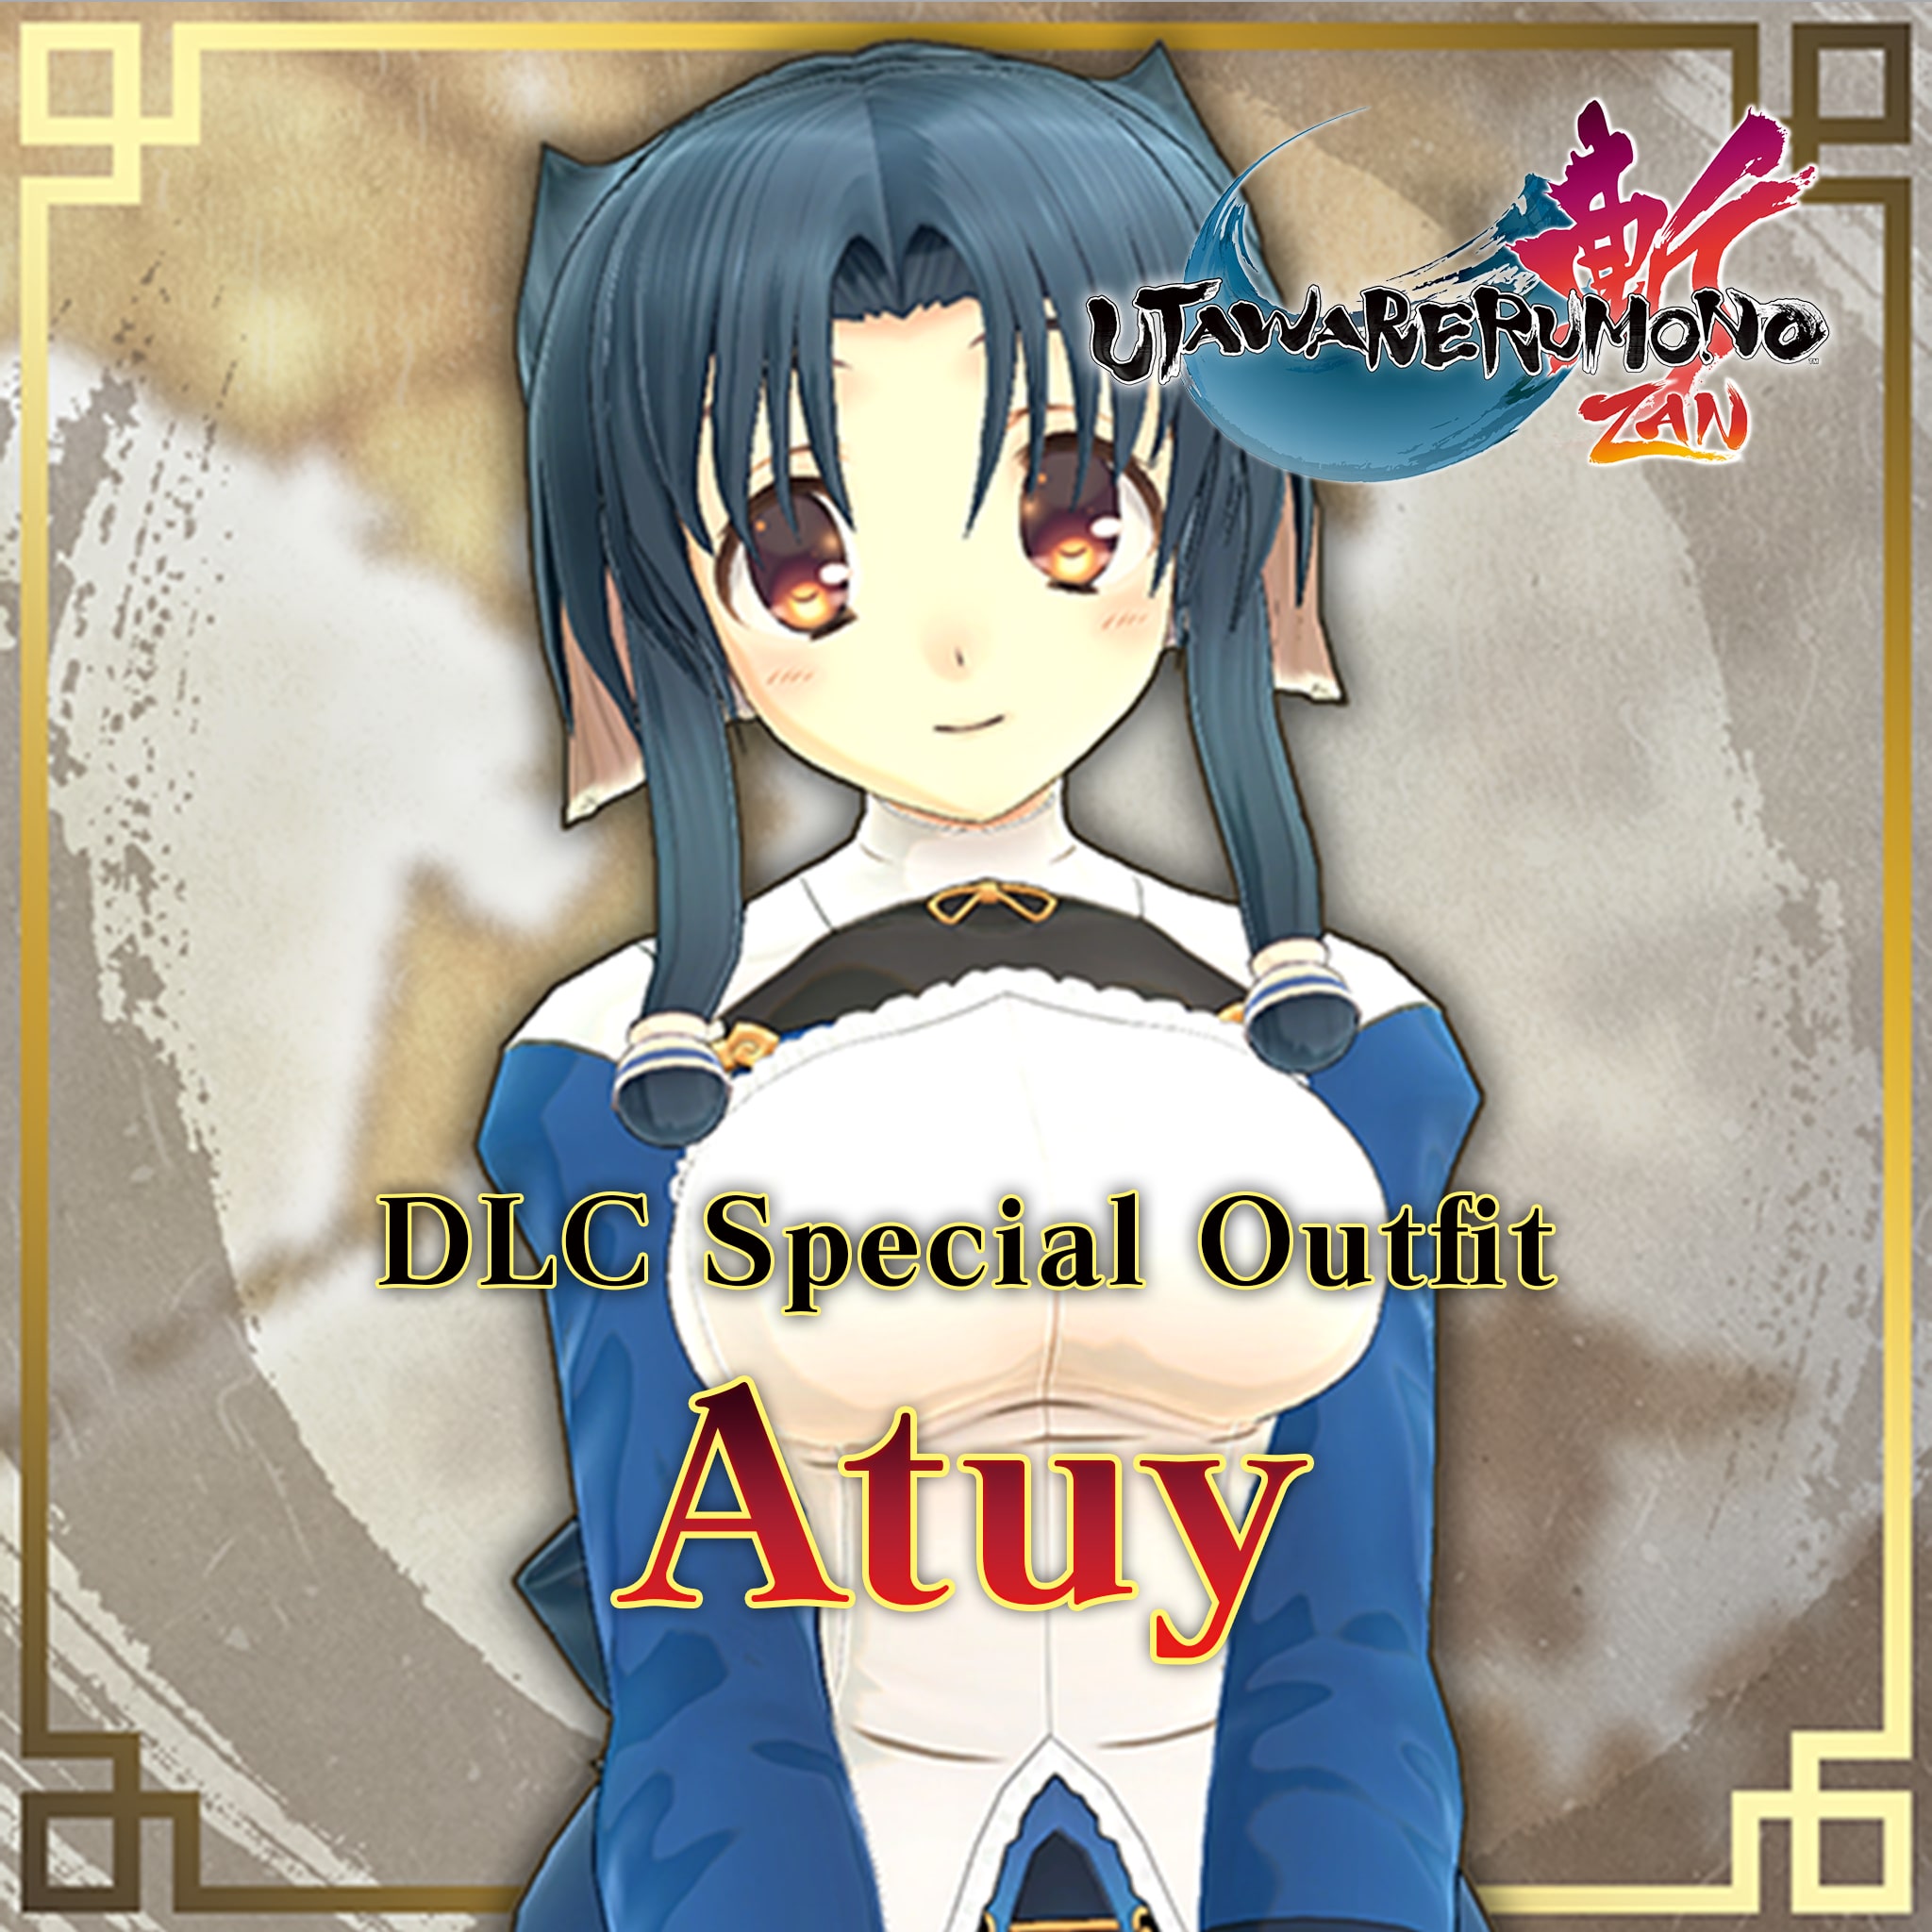 Utawarerumono: ZAN Special Outfit - Atuy